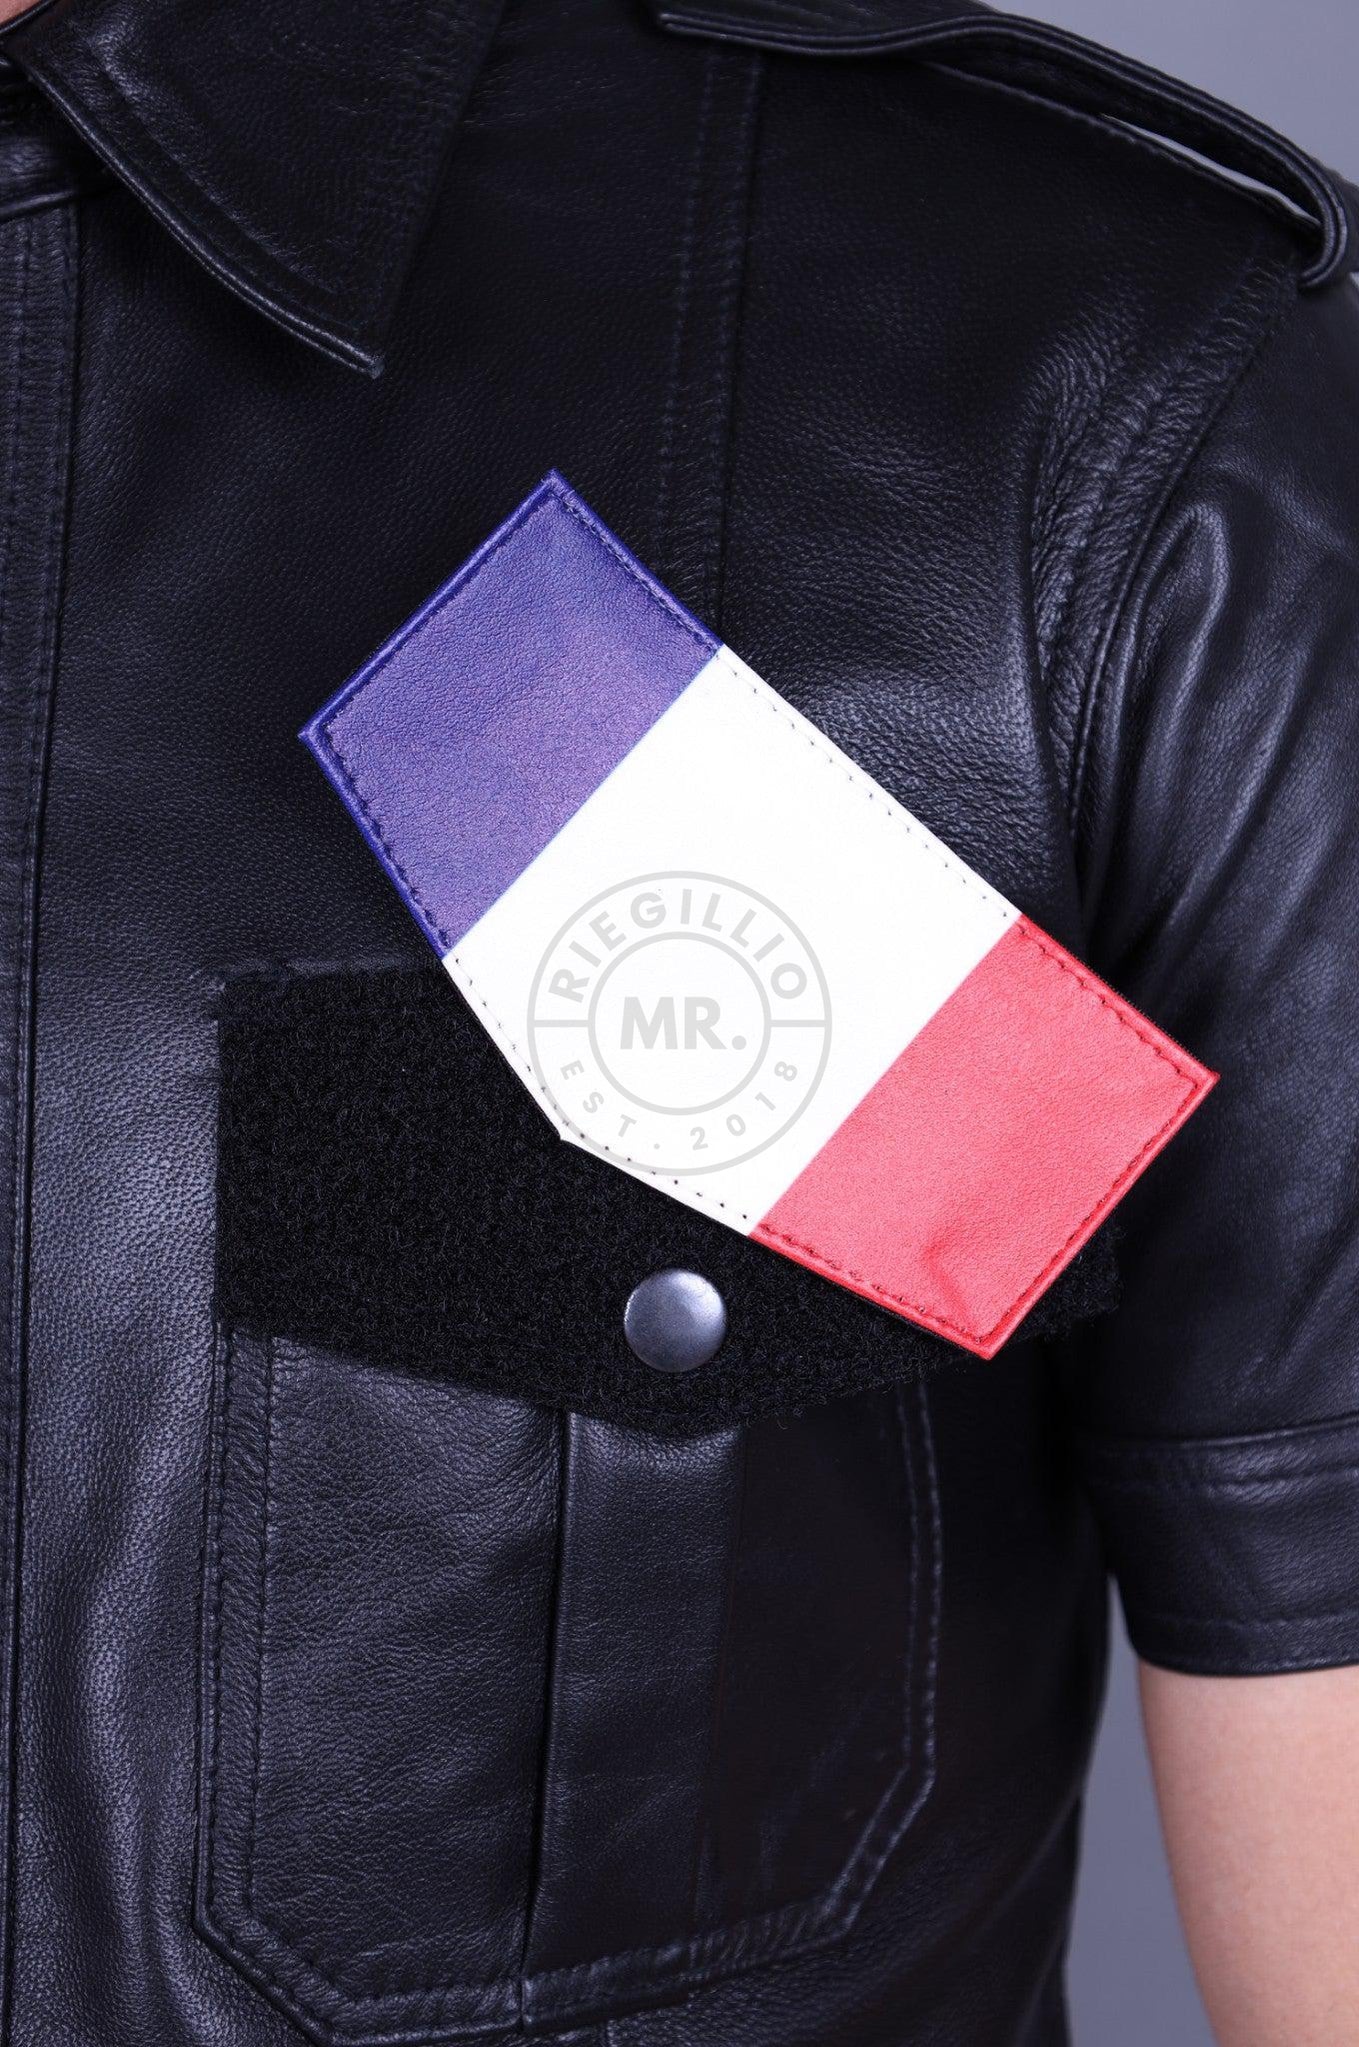 Velcro Patch - France Flag-at MR. Riegillio